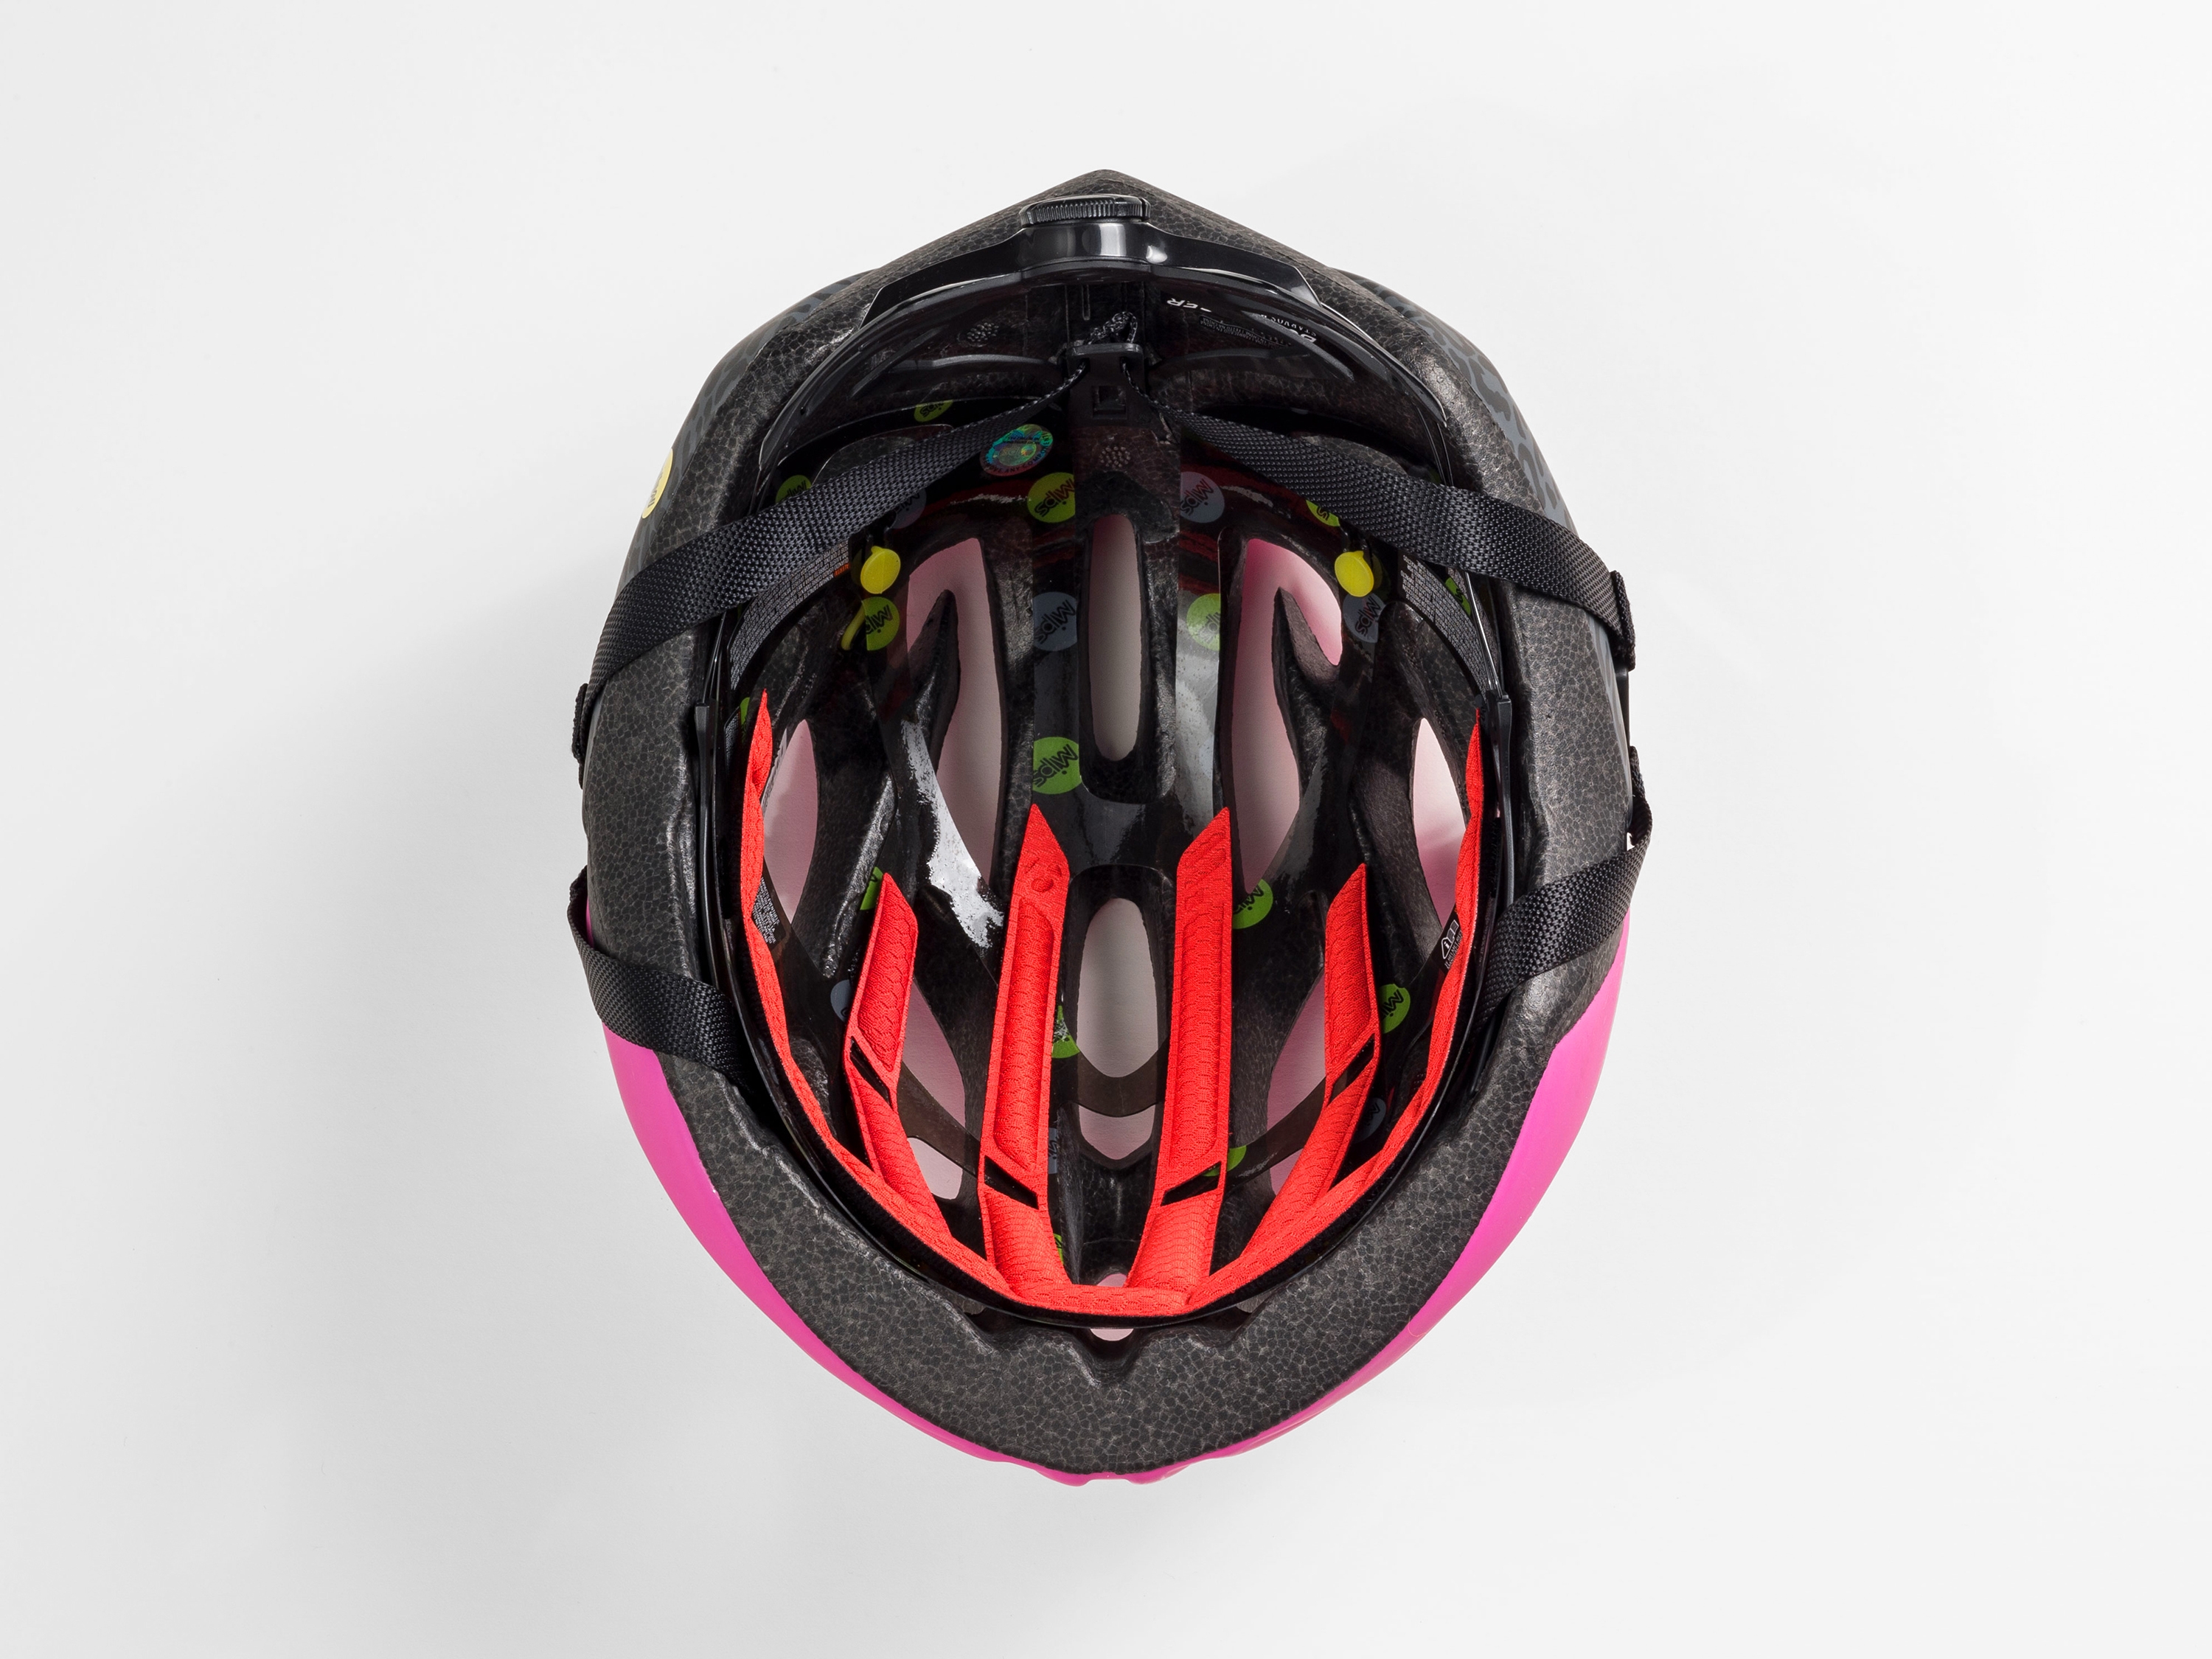 bontrager starvos road bike helmet